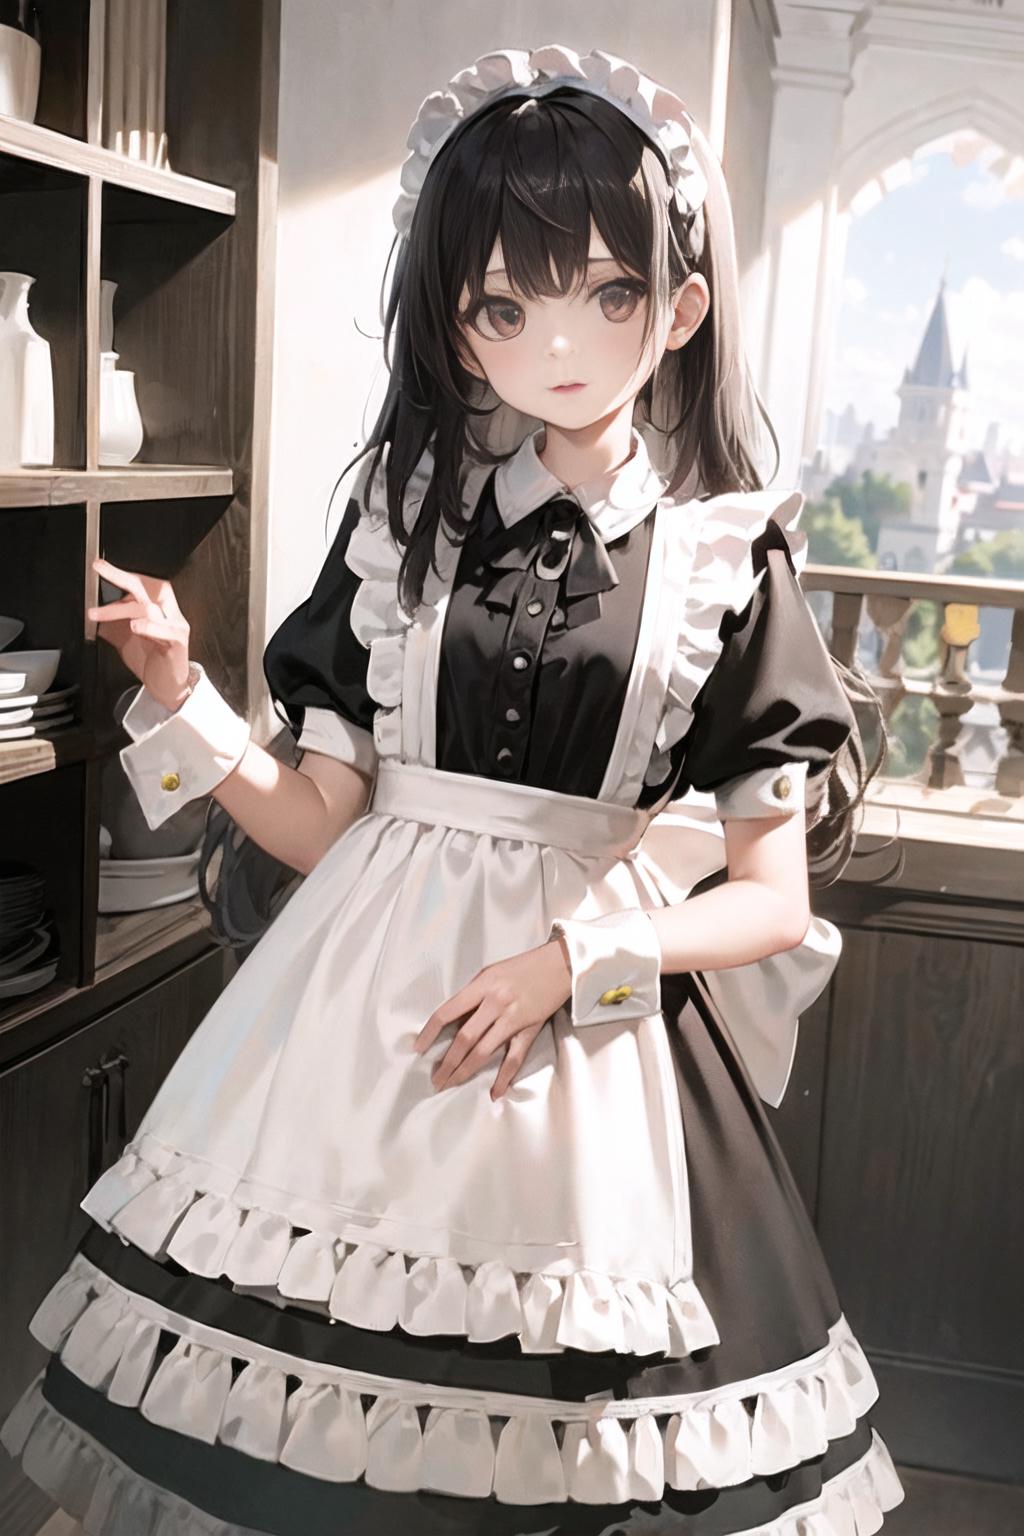 Maid costume | 女仆装 image by cyberAngel_